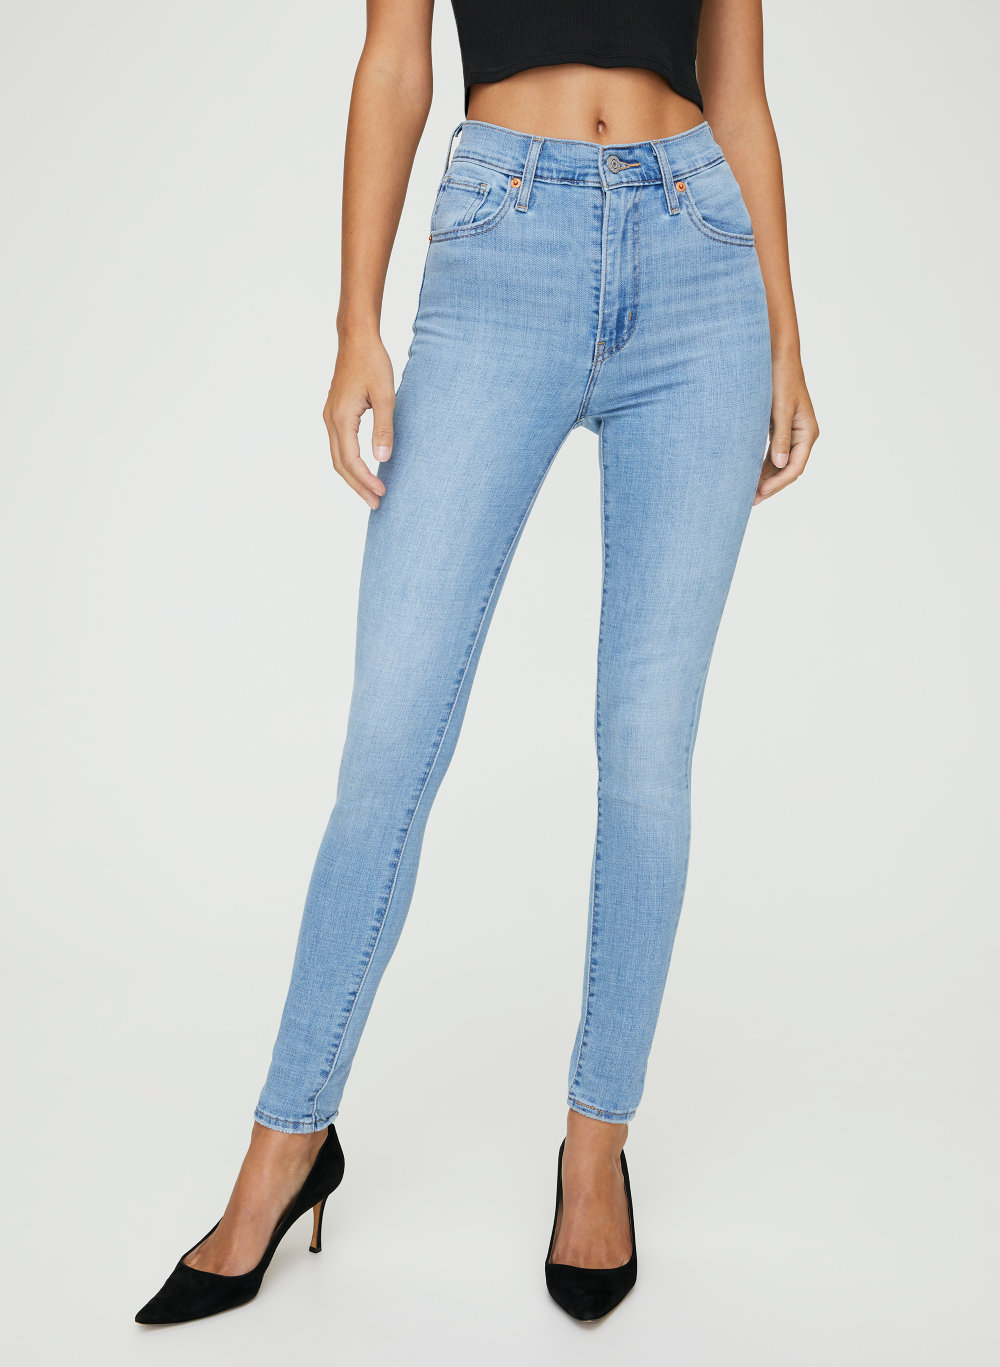 levis jeans skinny high waist